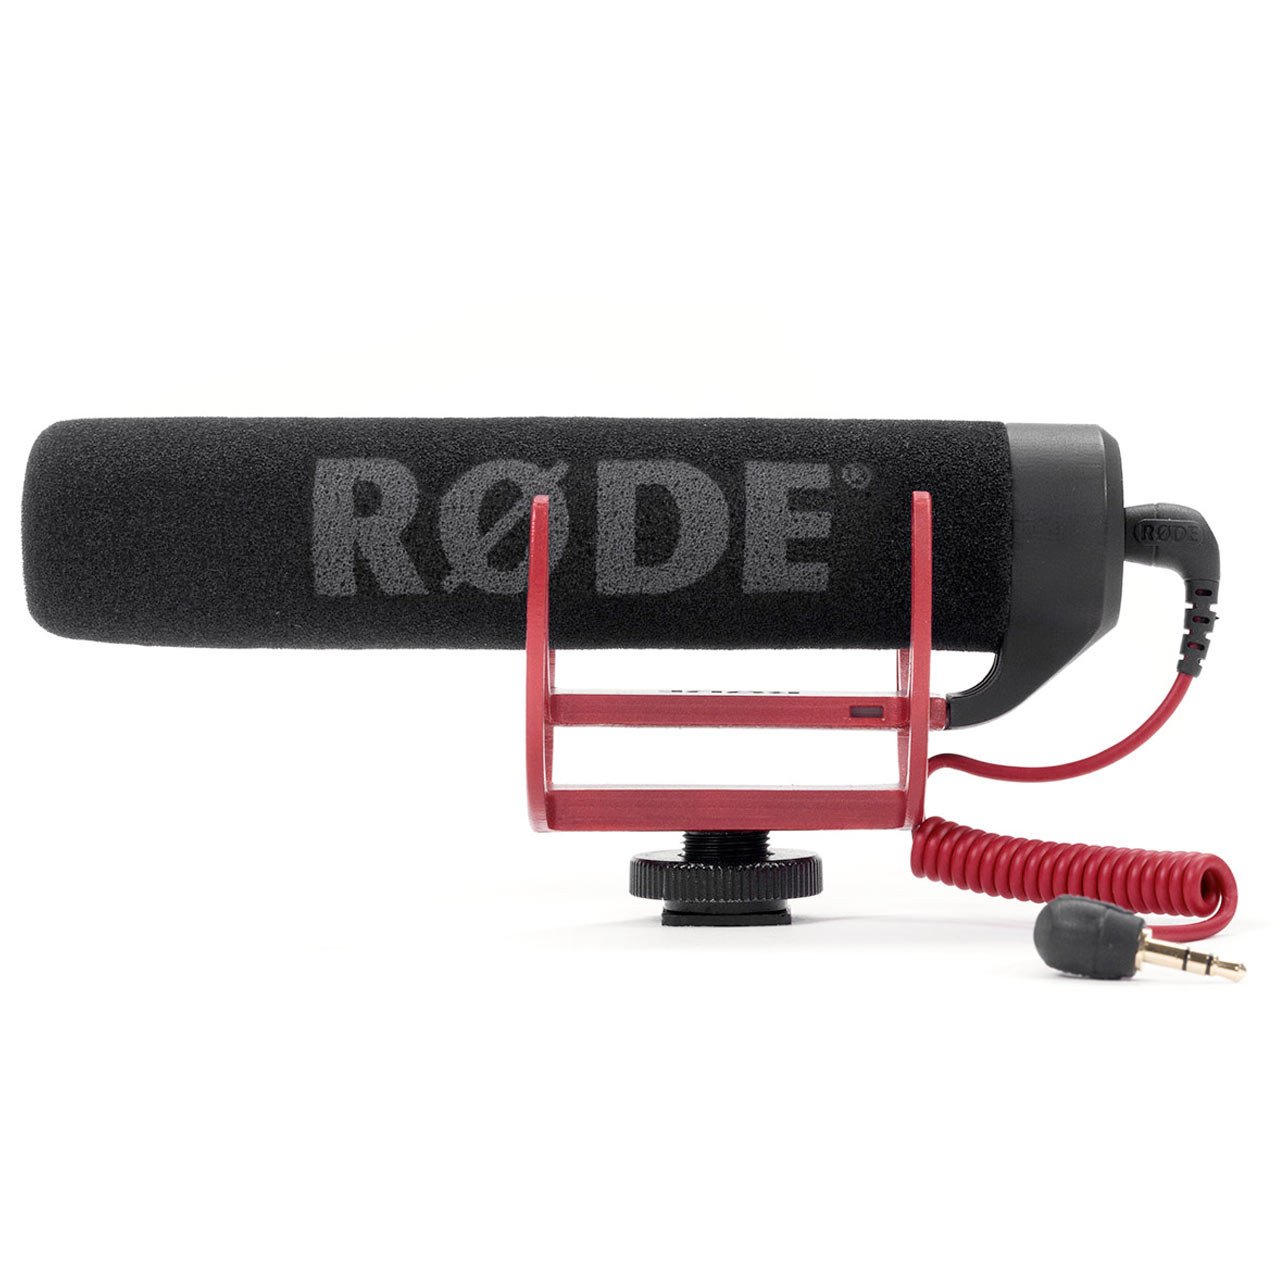 Video Microphones - RODE VideoMic GO Lightweight On-Camera Microphone